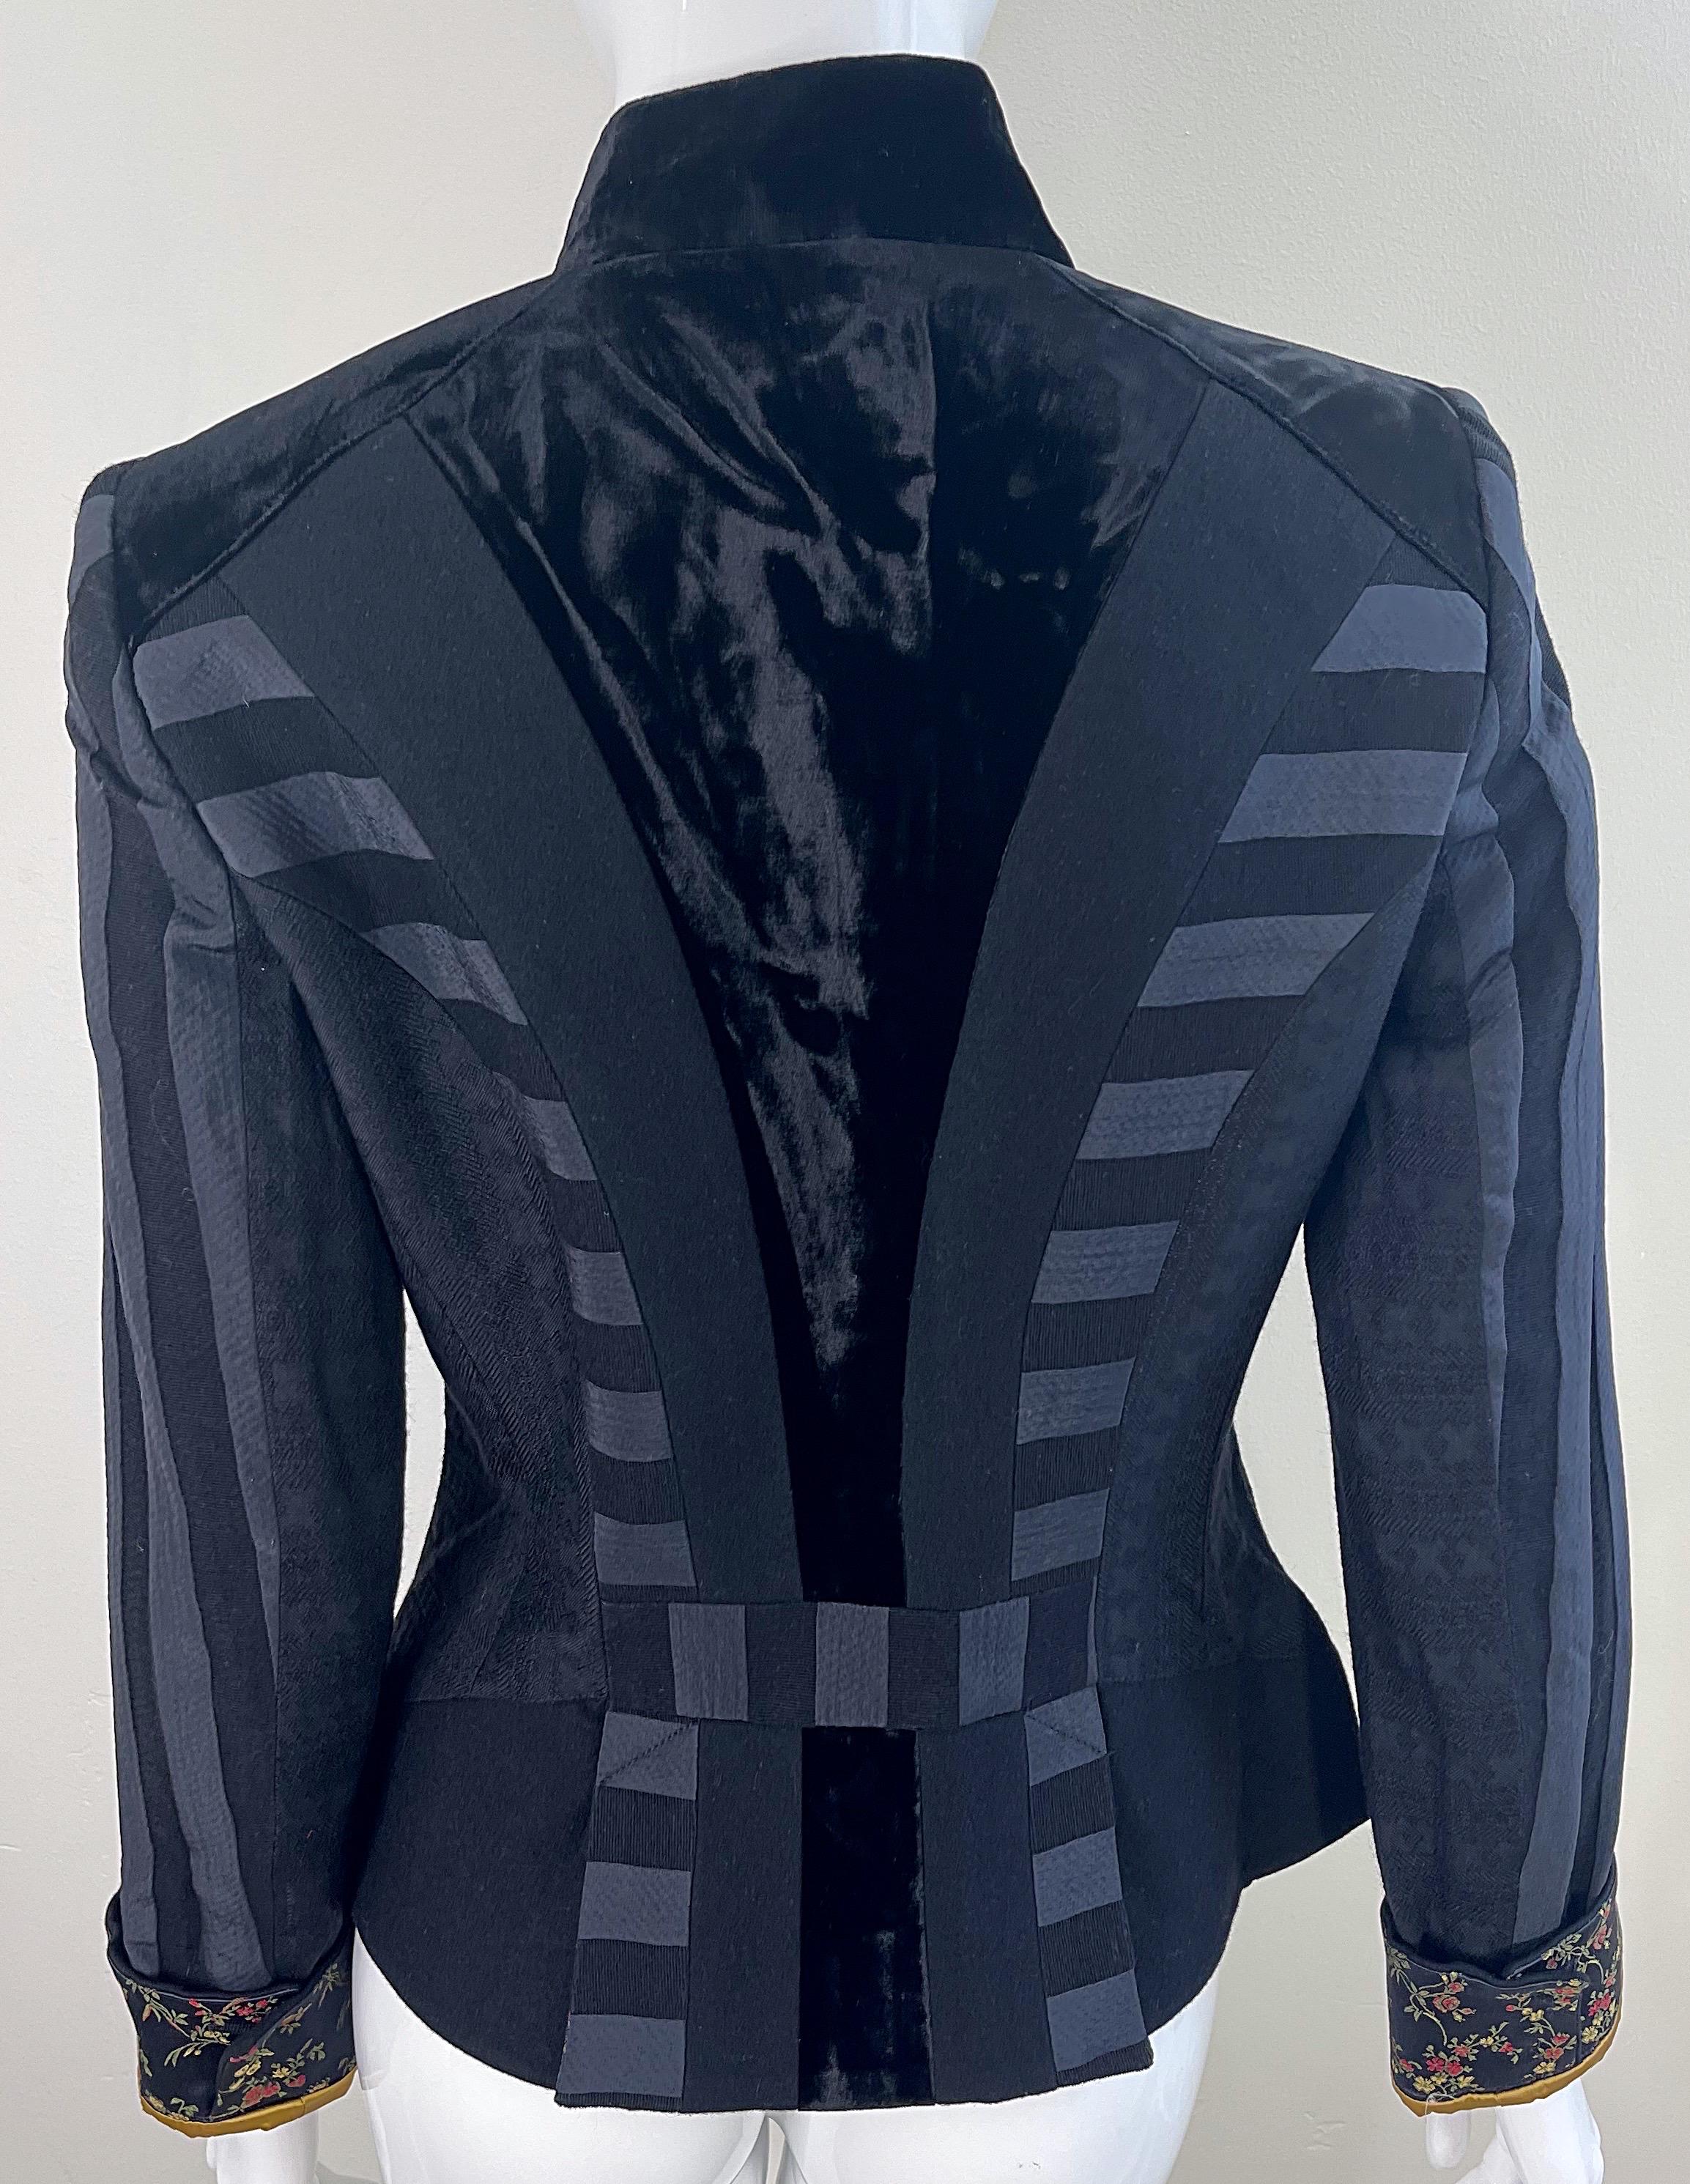 Etro Black Silk Blend Size 44 / US 8 Military Inspired Jacket w/ Flower Cuffs For Sale 10